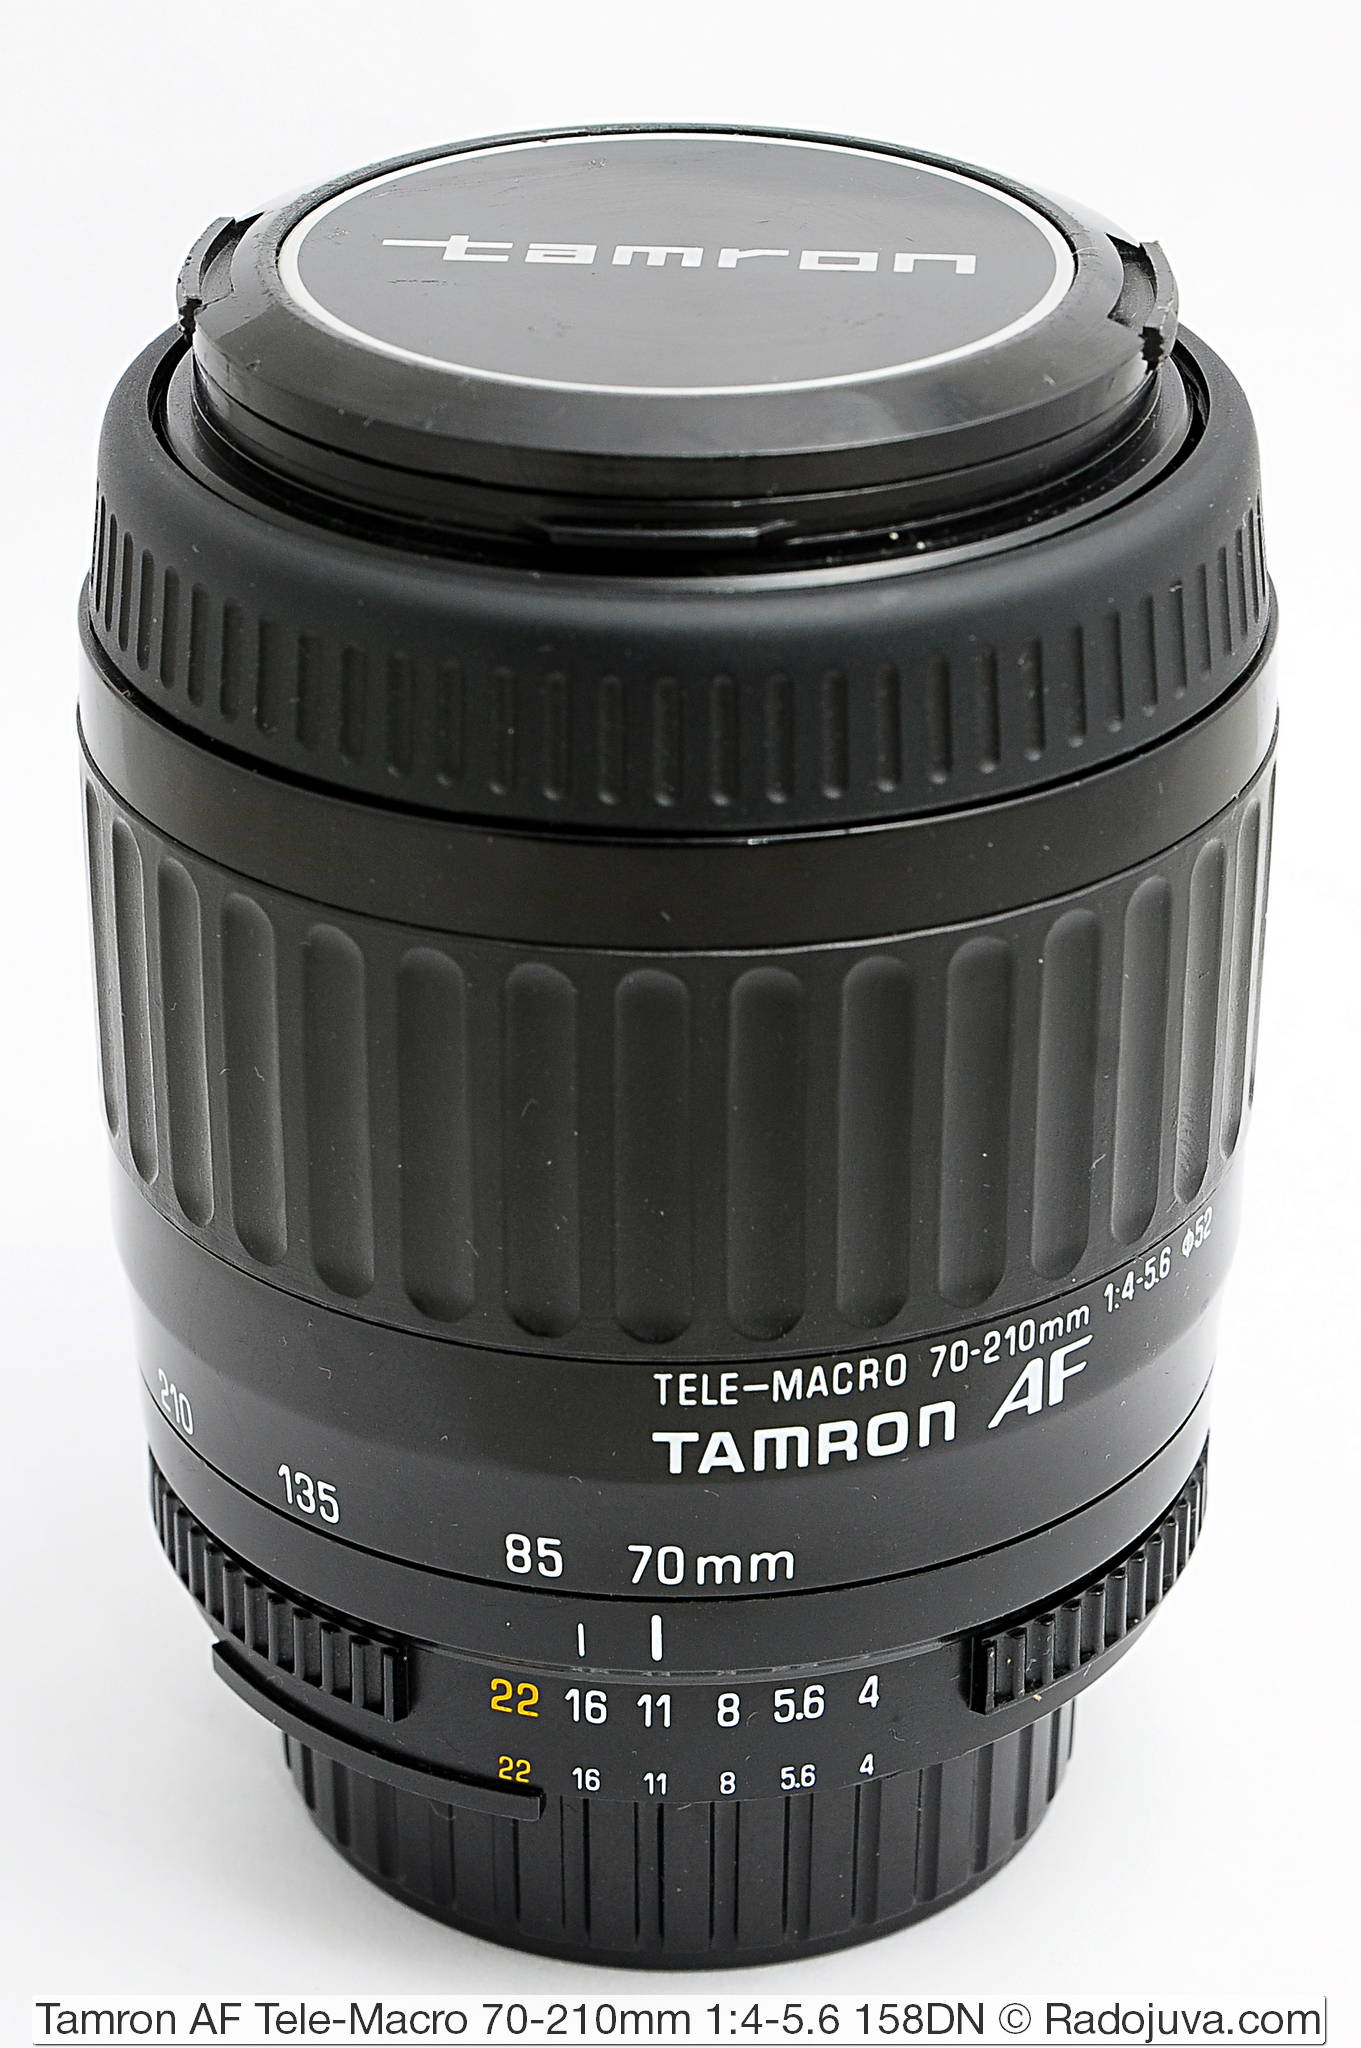 Tamron AF Tele-Macro 70-210mm 1:4-5.6 158DN